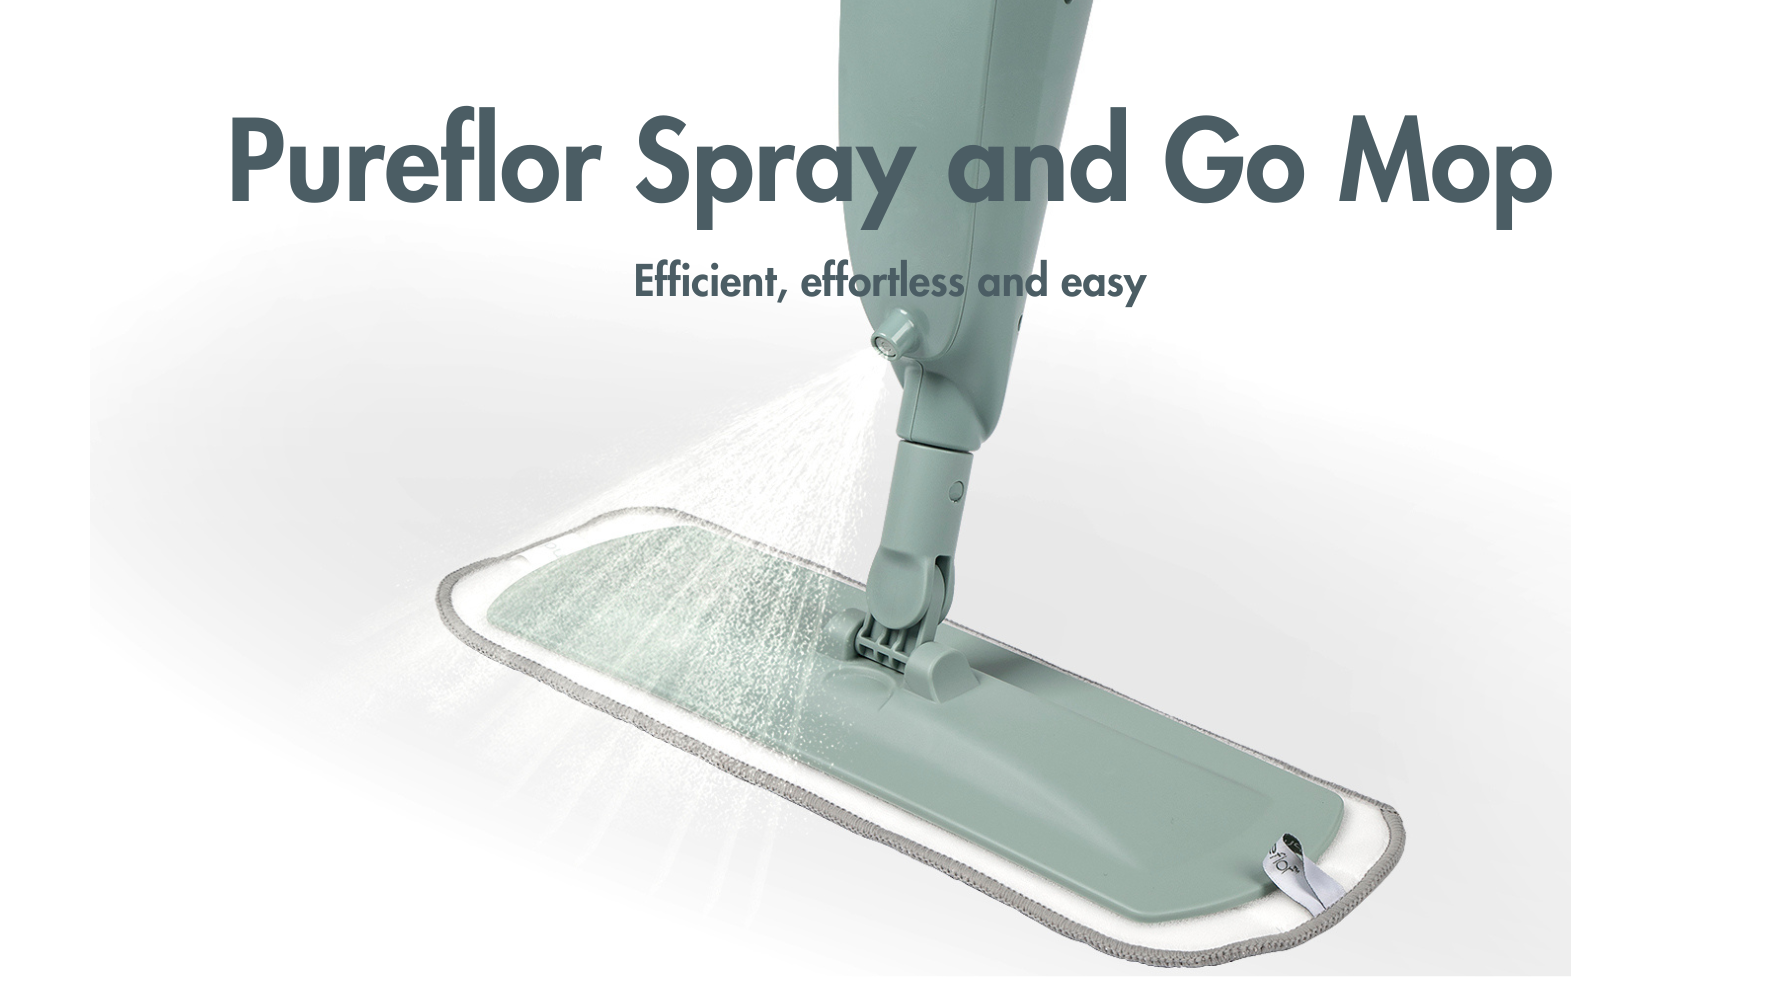 Pureflor Spray and Go Mop